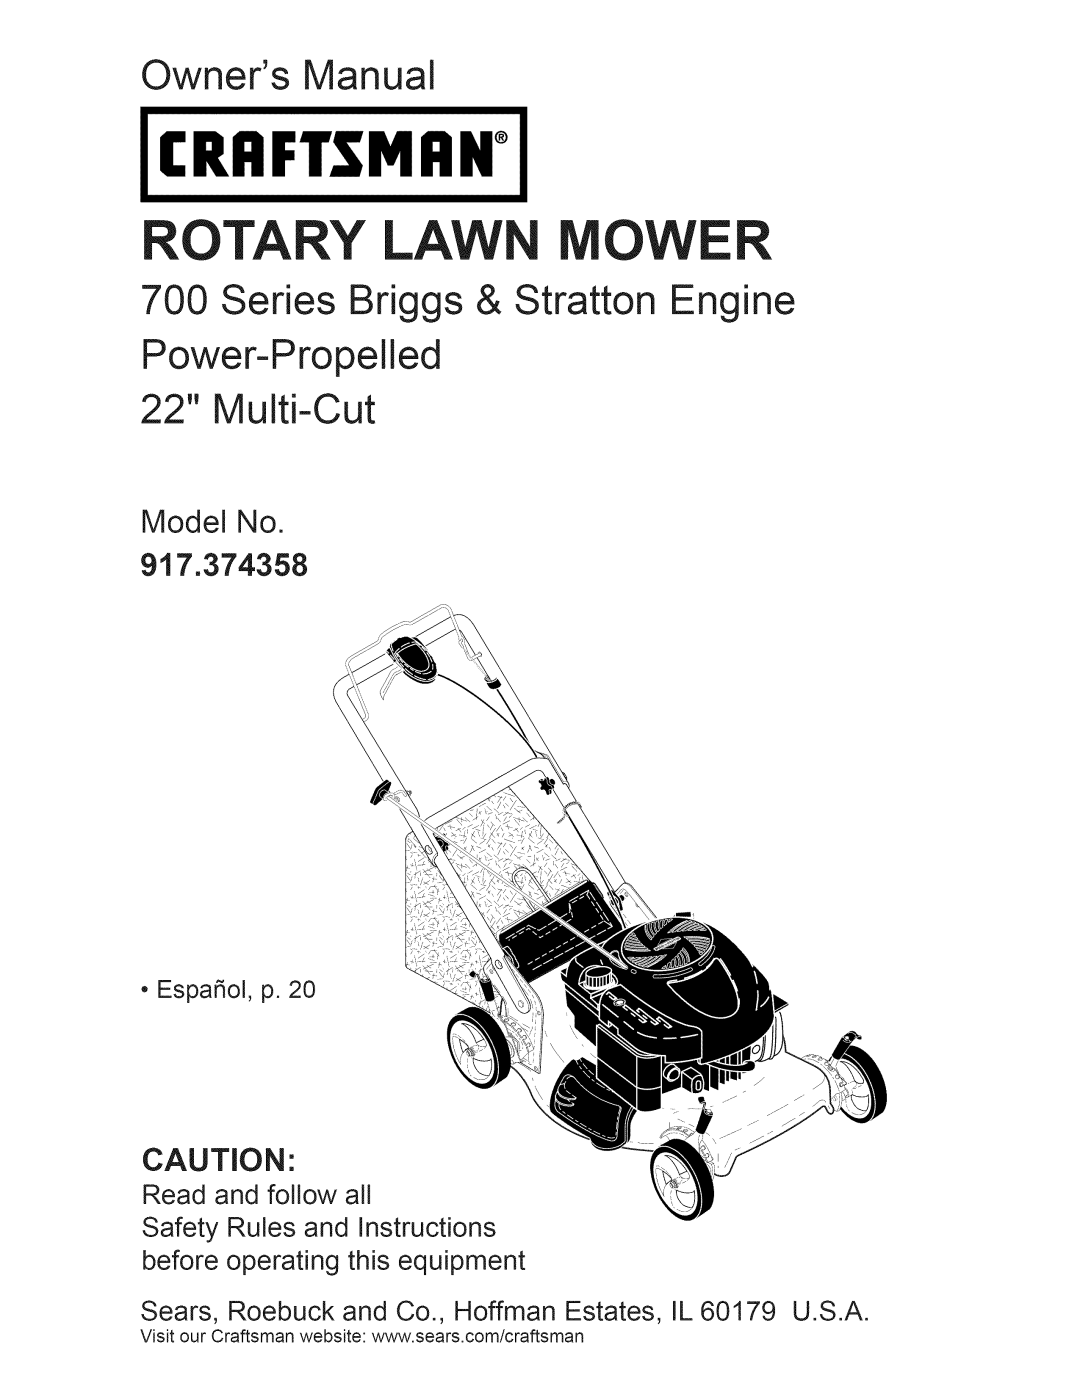 Craftsman owner manual Model No 917.374358, Craftsman, Rotary Lawn Mower, Owners Manual, Power-Propelled 22 Multi-Cut 